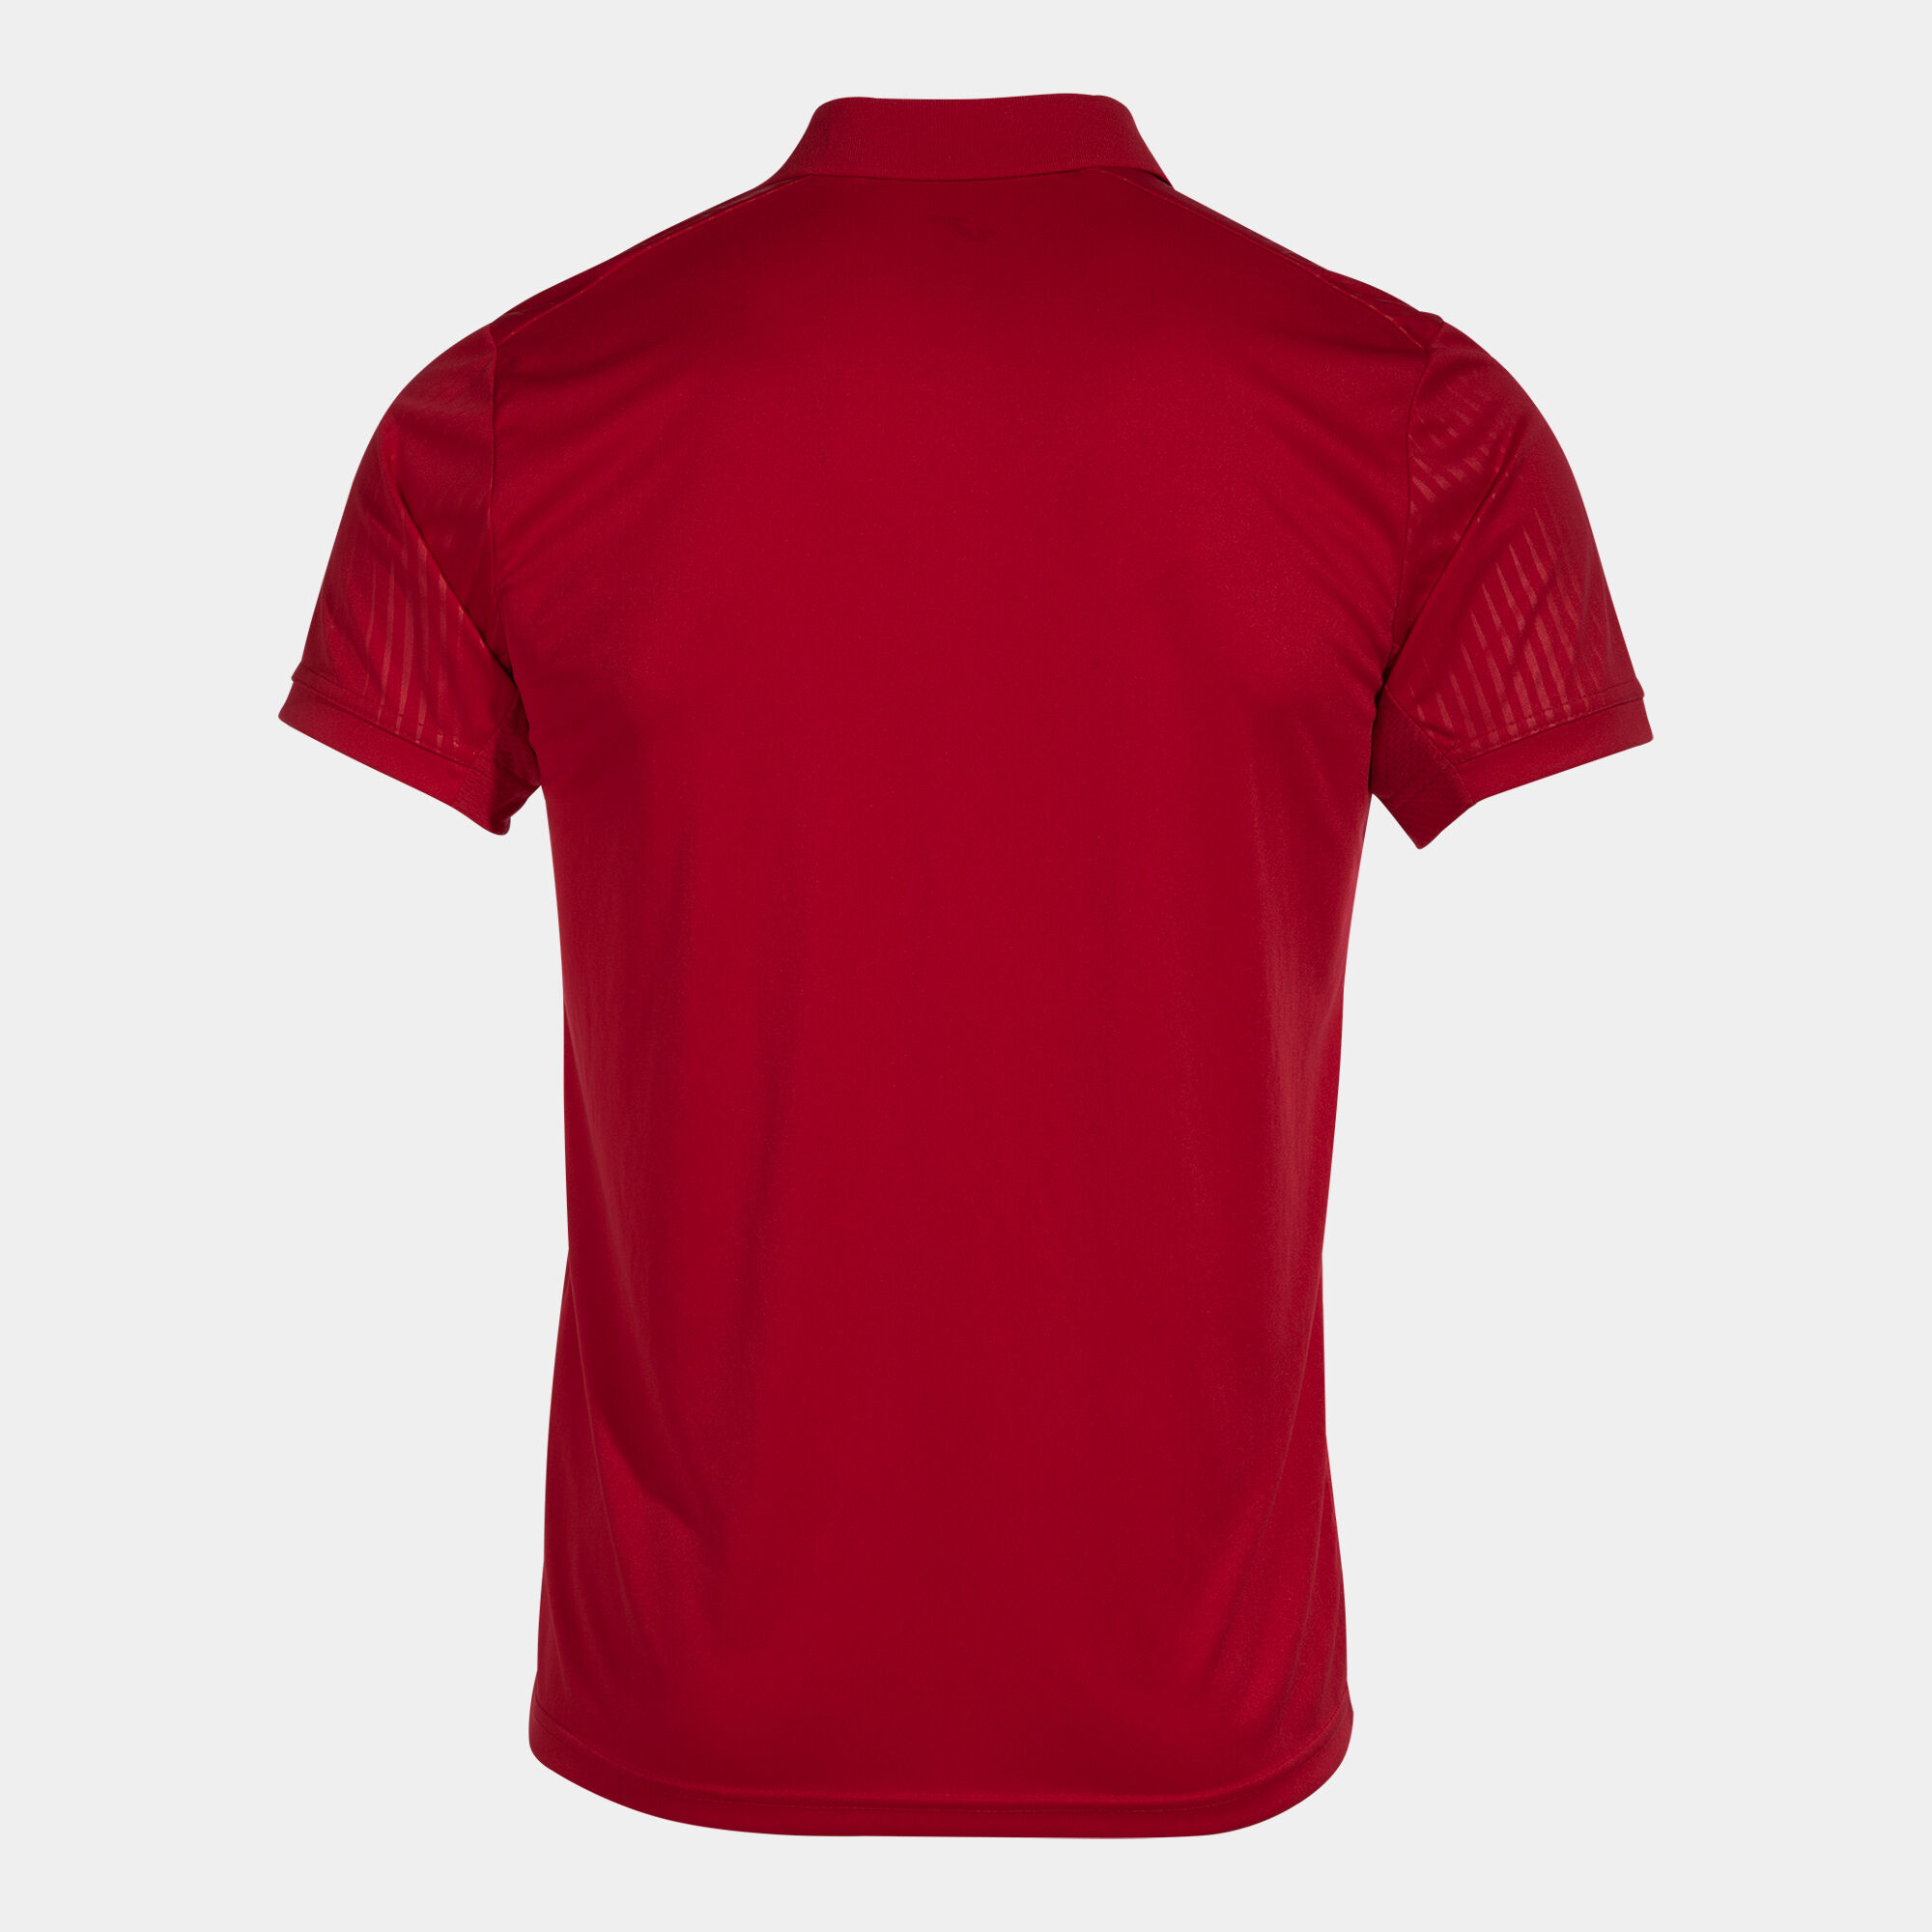 Camiseta Joma Montreal rojo hombre